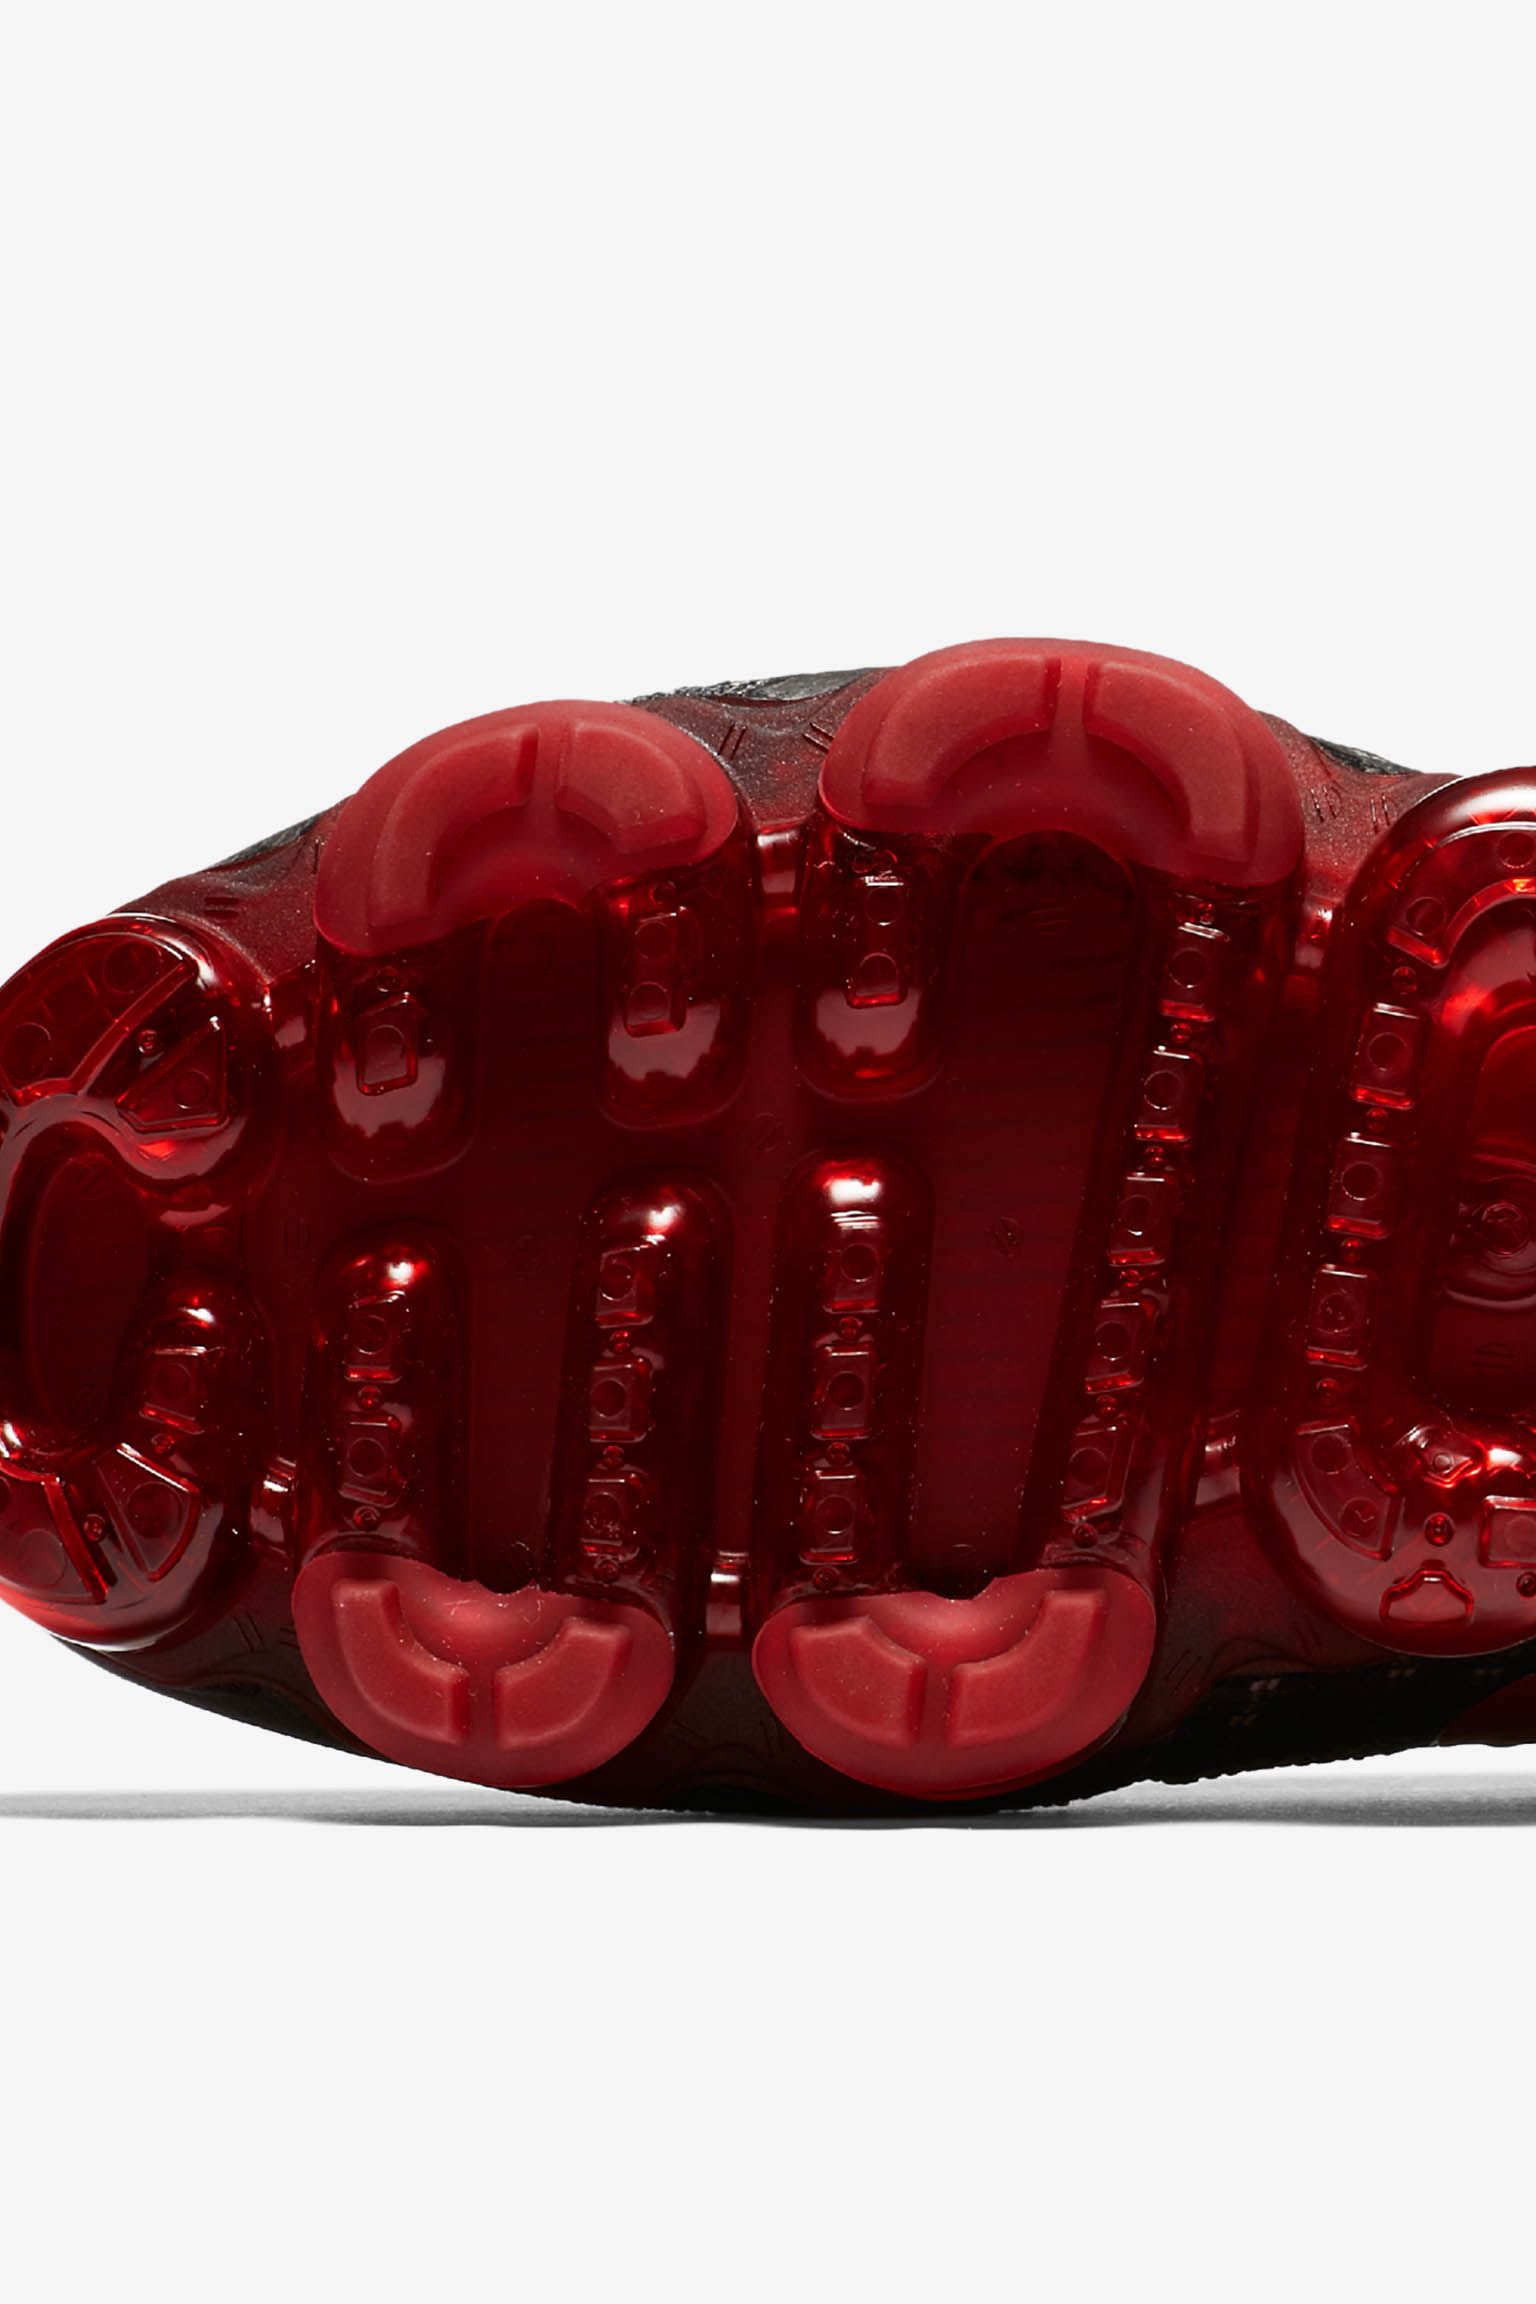 Examinar detenidamente Señal directorio Nike Air VaporMax 'Black & Dark Team Red' Release Date. Nike SNKRS